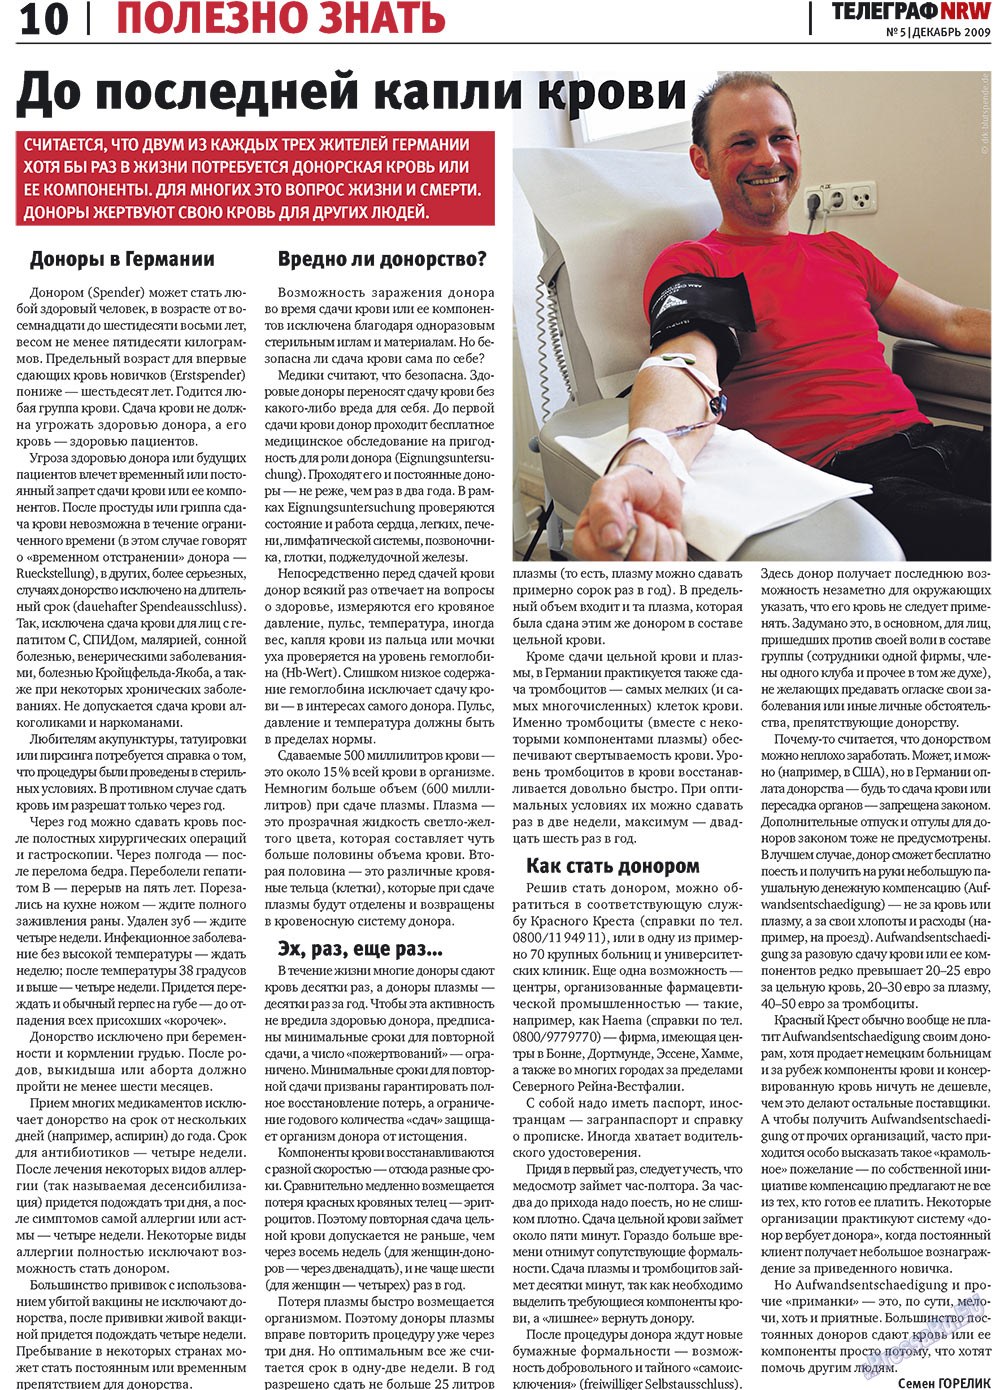 Телеграф NRW, газета. 2009 №5 стр.10